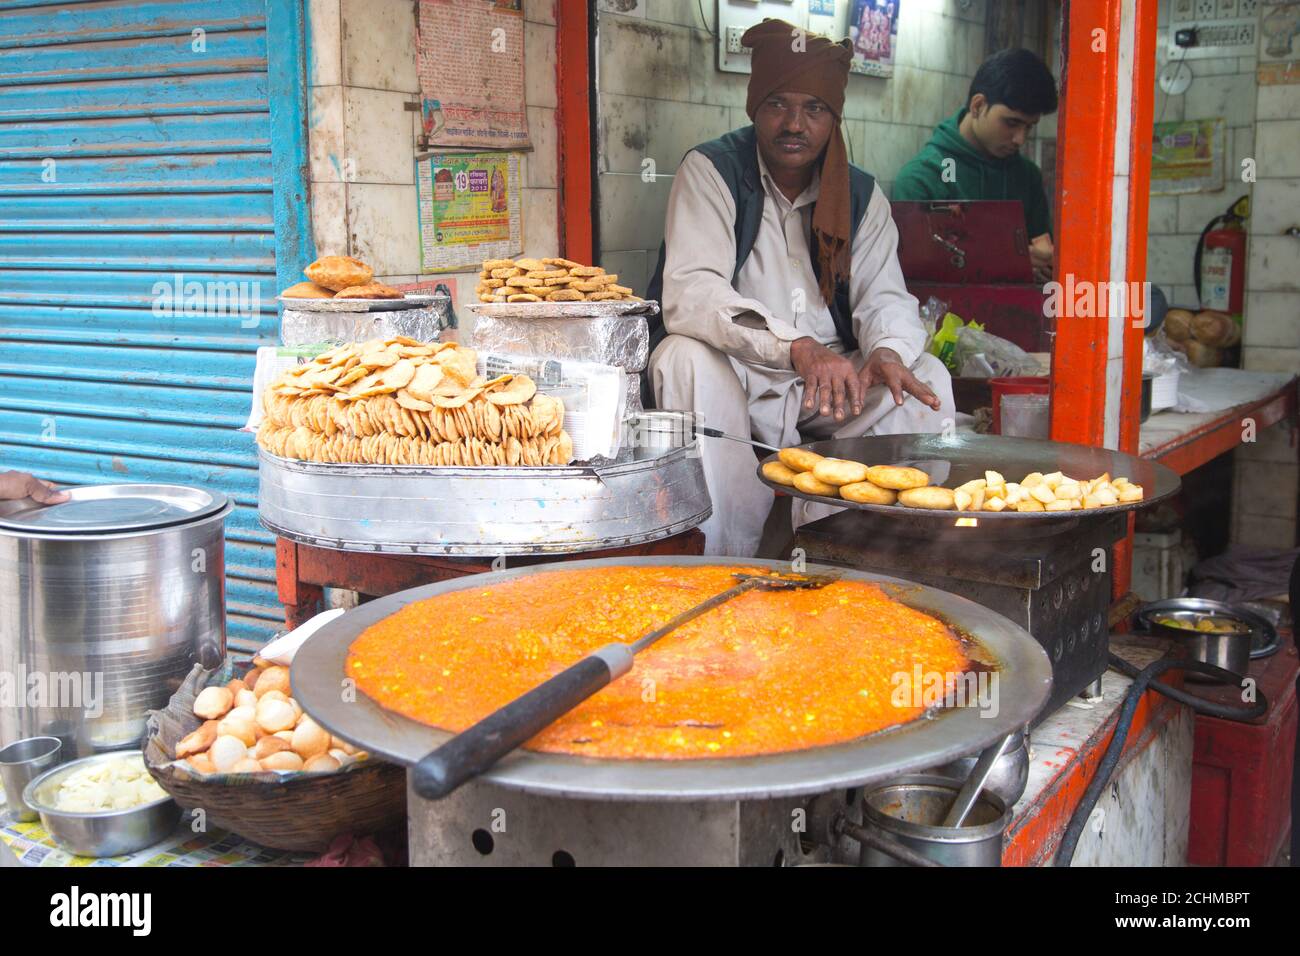 Street vendor of fried food in Delhi, India Stock Photo